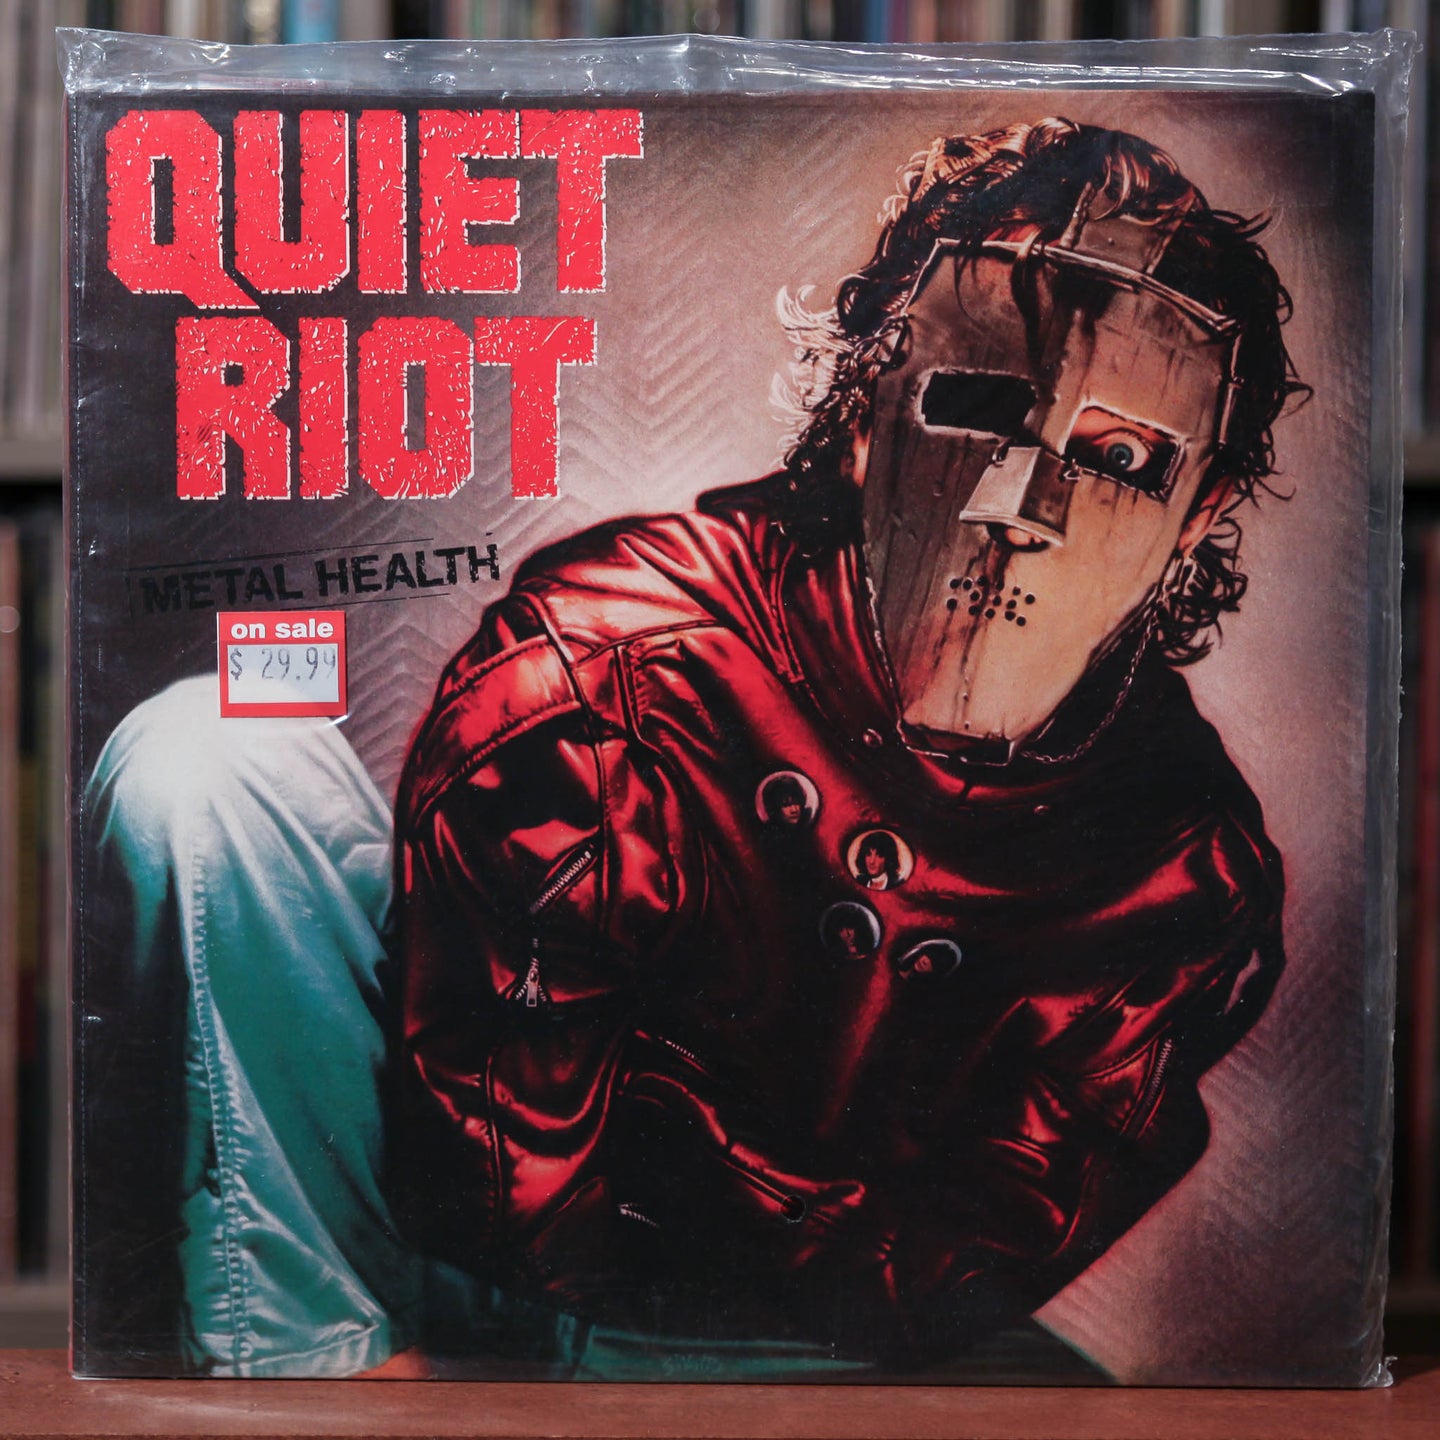 Quiet Riot - Mental Health - 180g Red Vinyl - 2010 Friday Music, SEALED